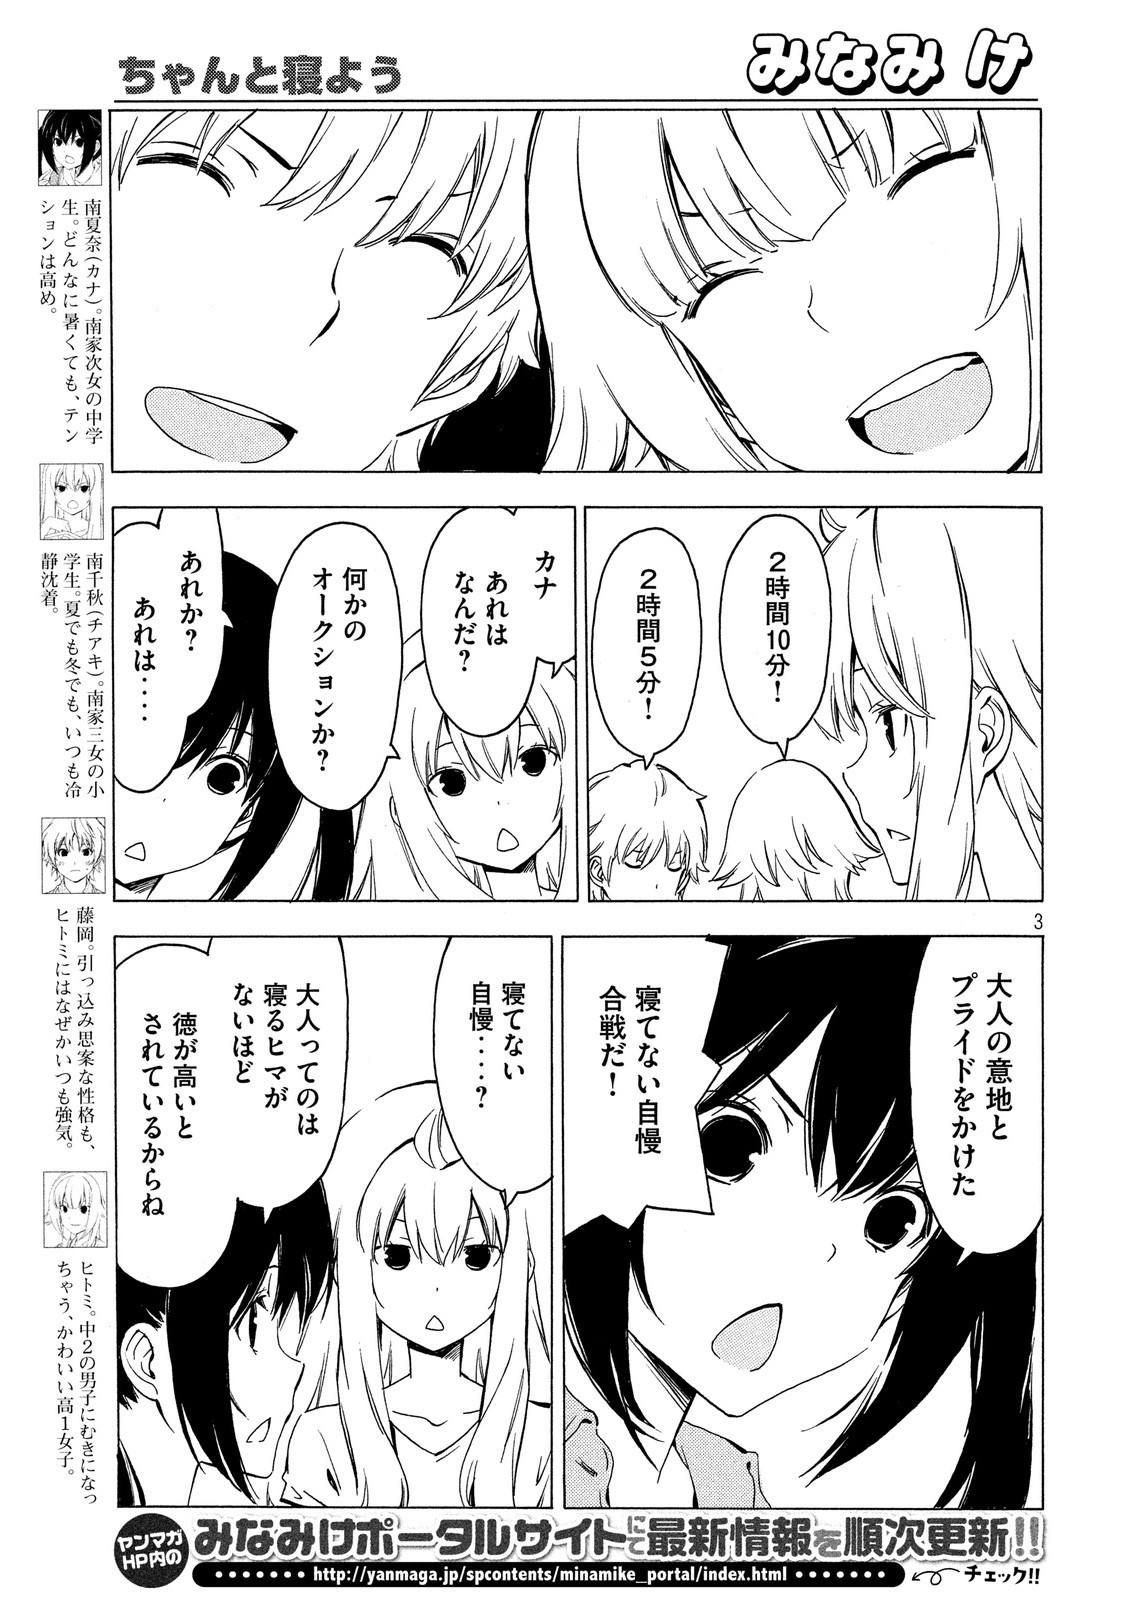 Minami-ke - Chapter 274 - Page 3